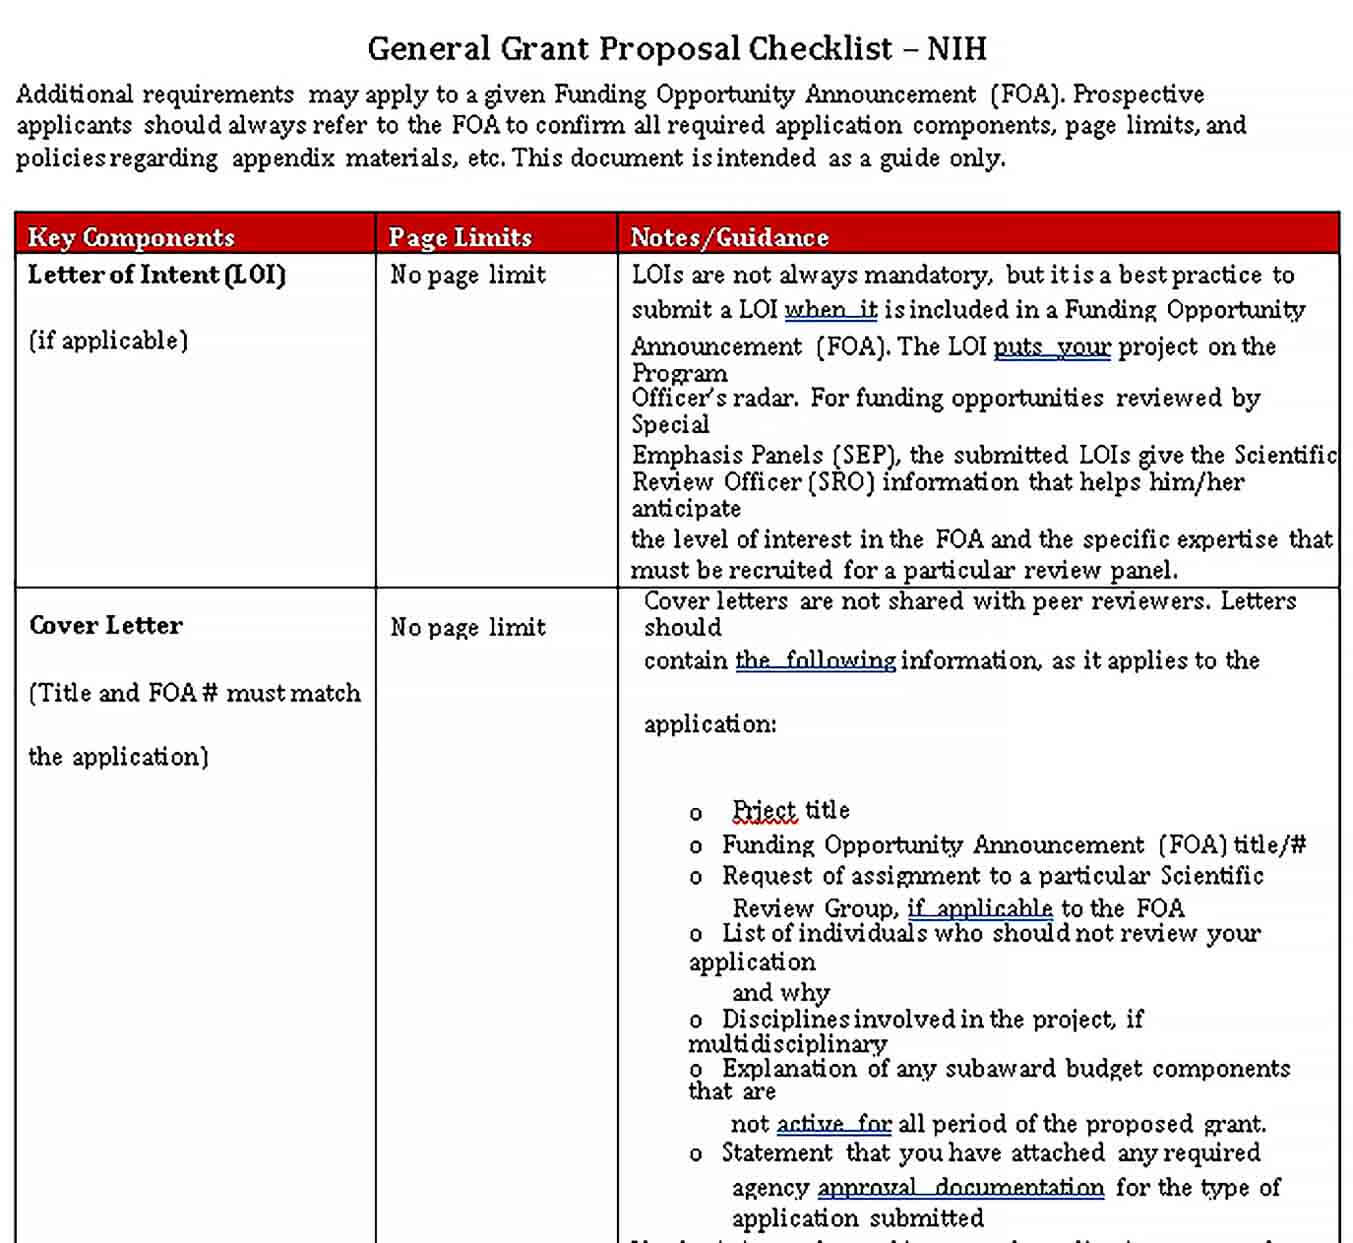 Sample General Grant Proposal Checklist Template